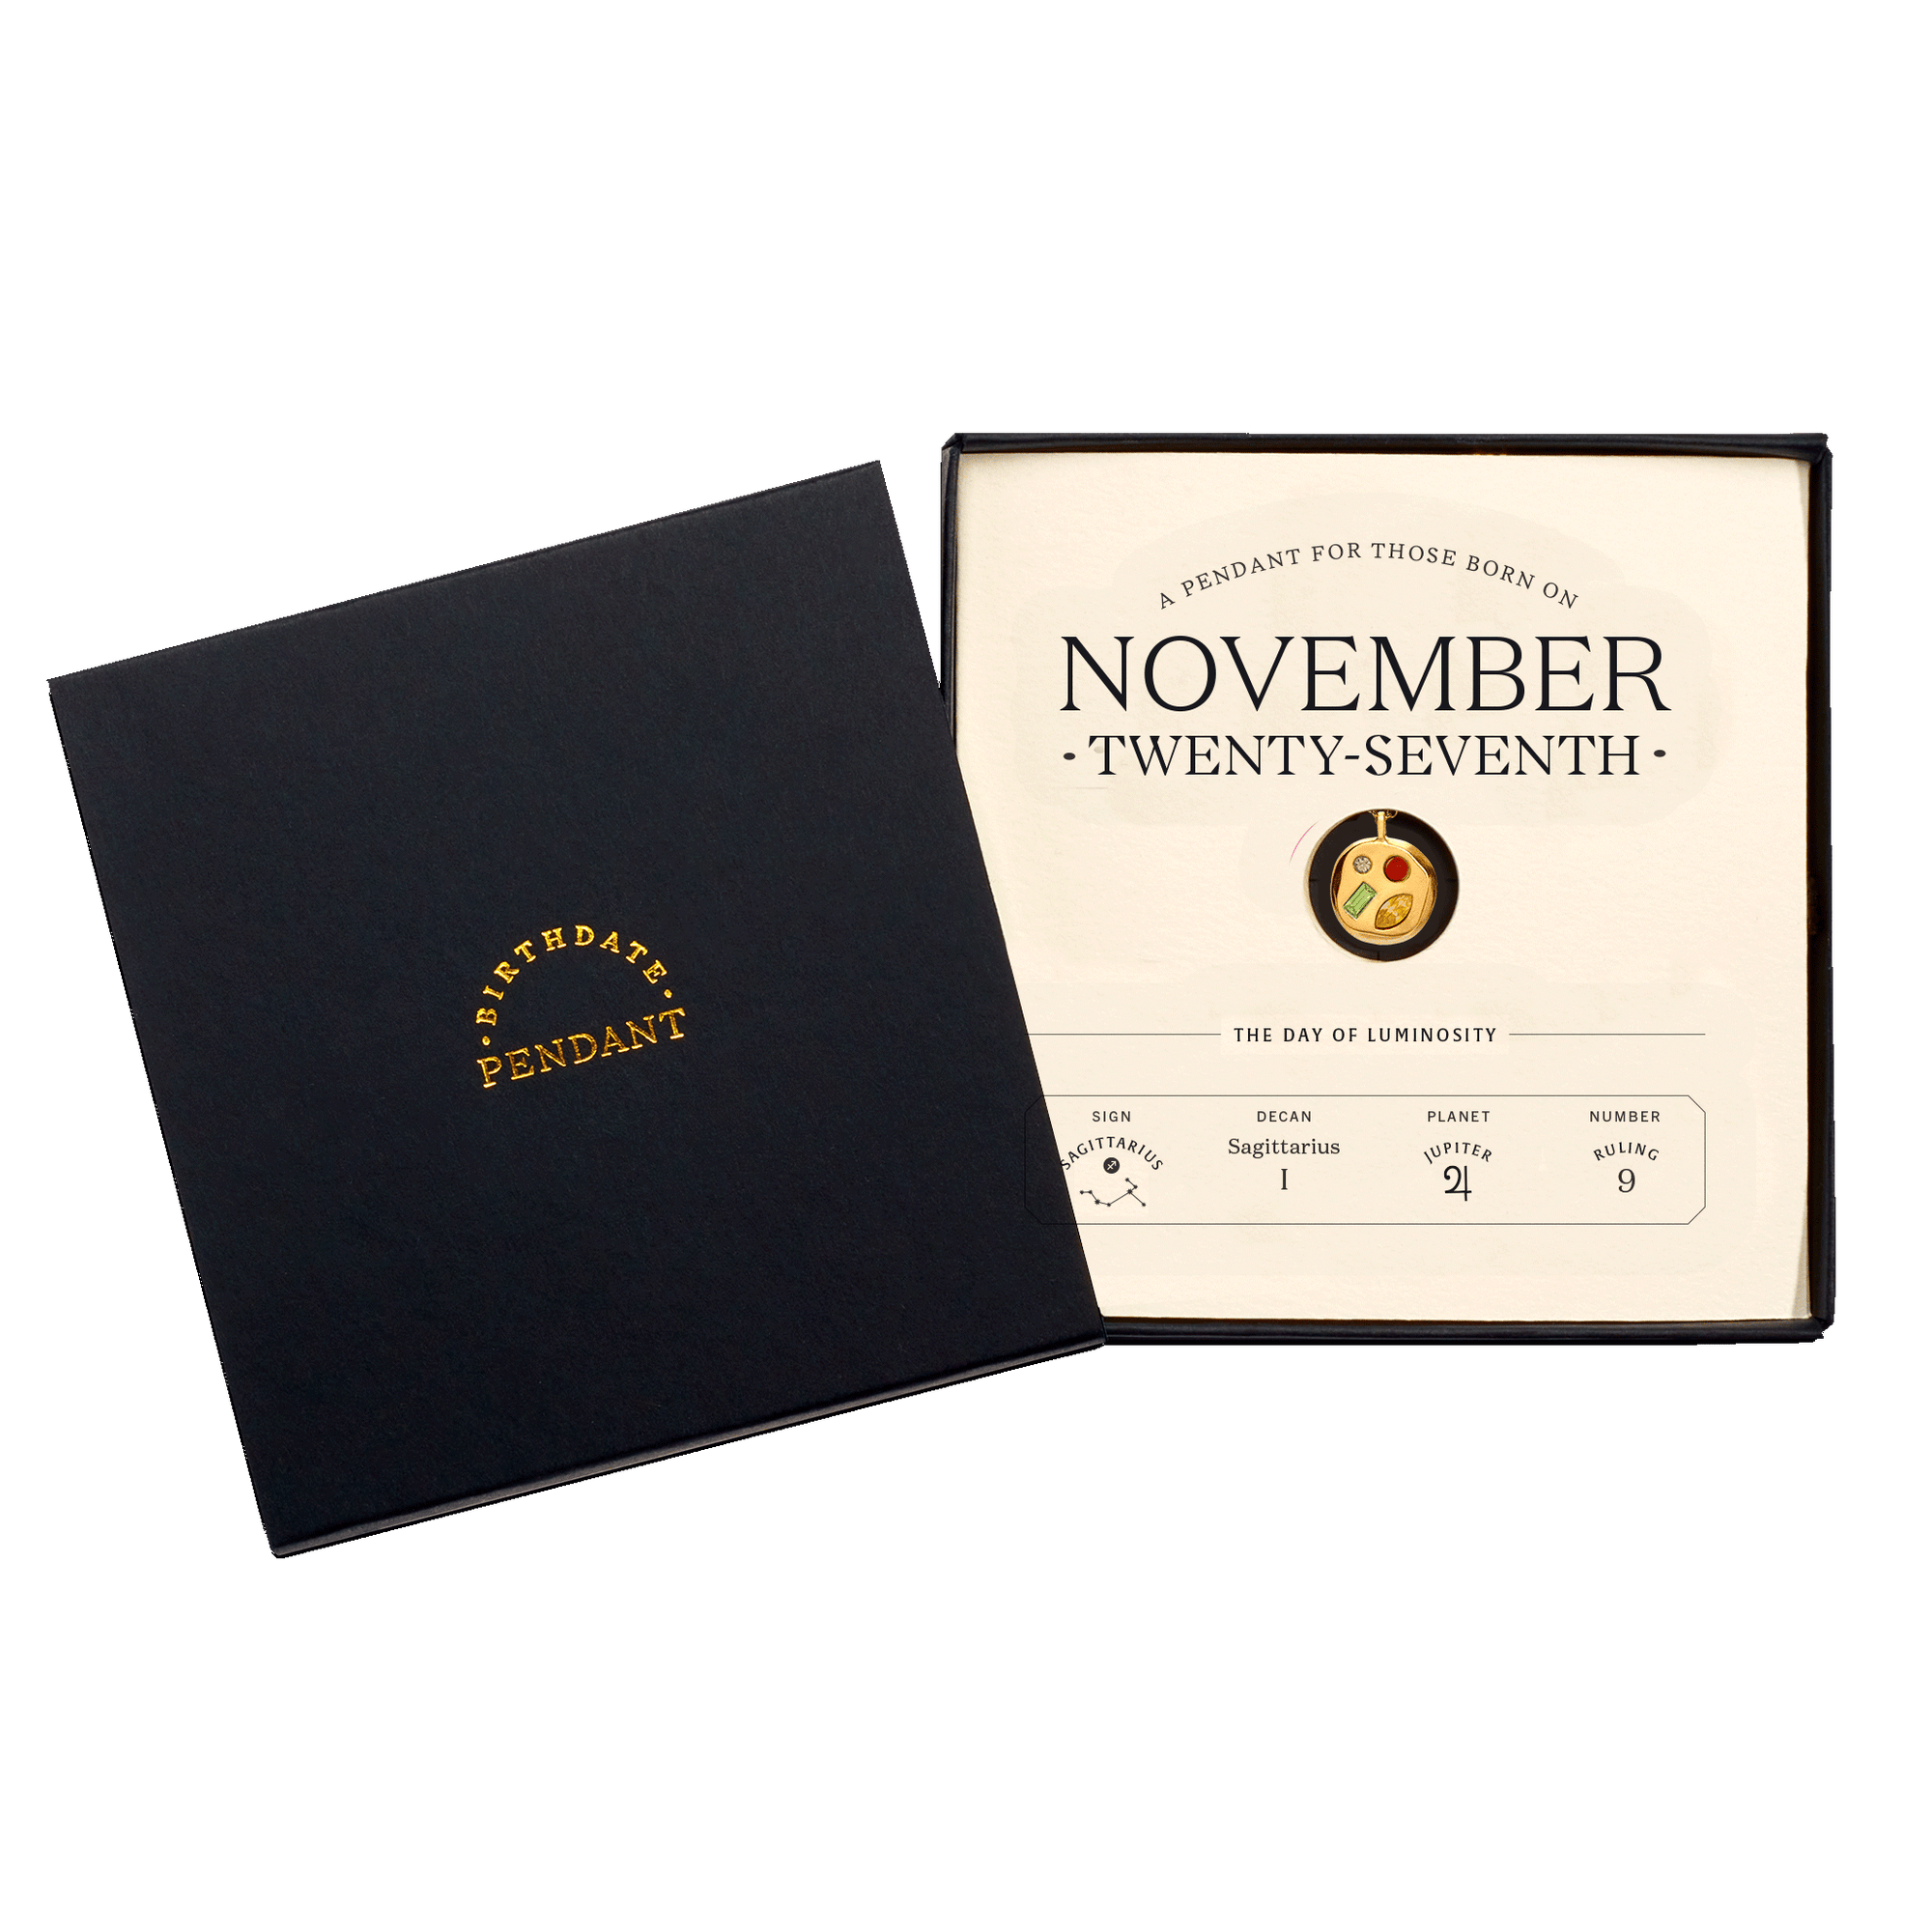 The November Twenty-Seventh Pendant inside its box